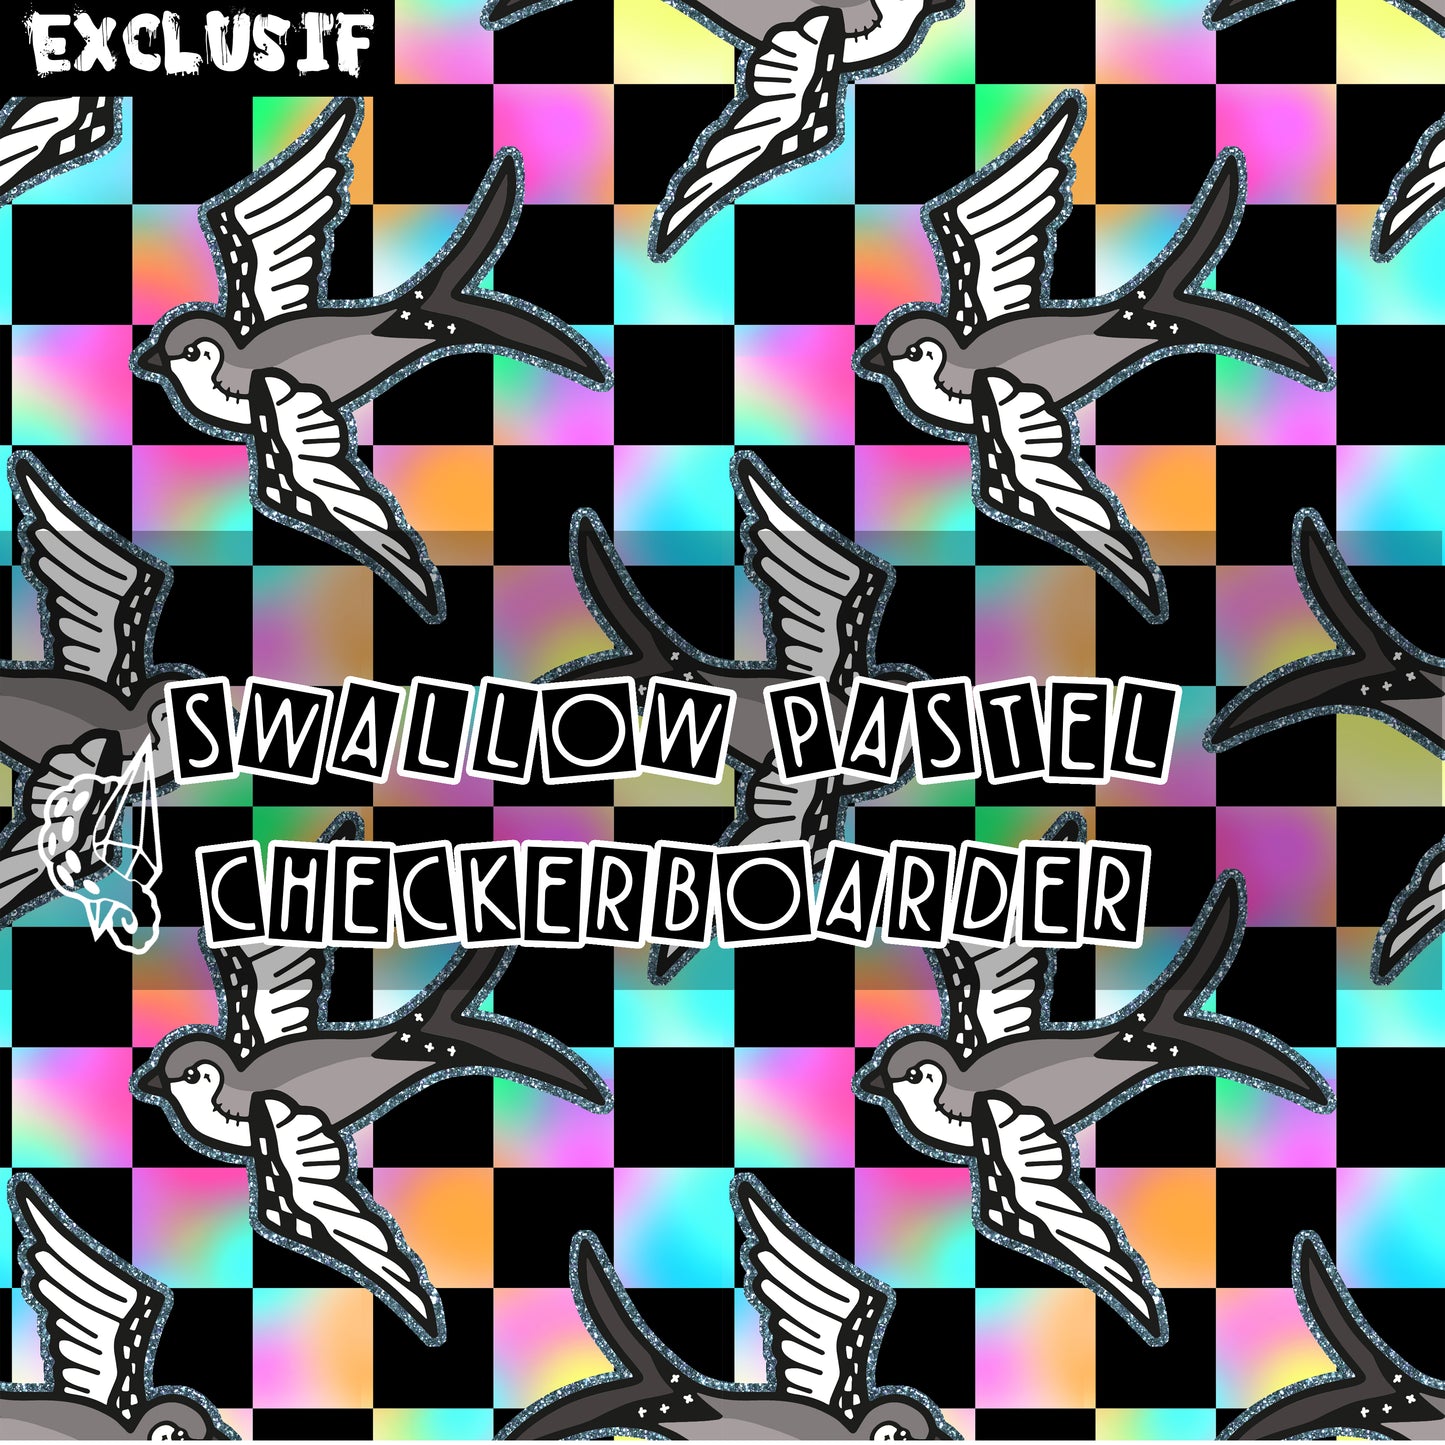 Swallow Checkerboarder [Pastel ou Gris]